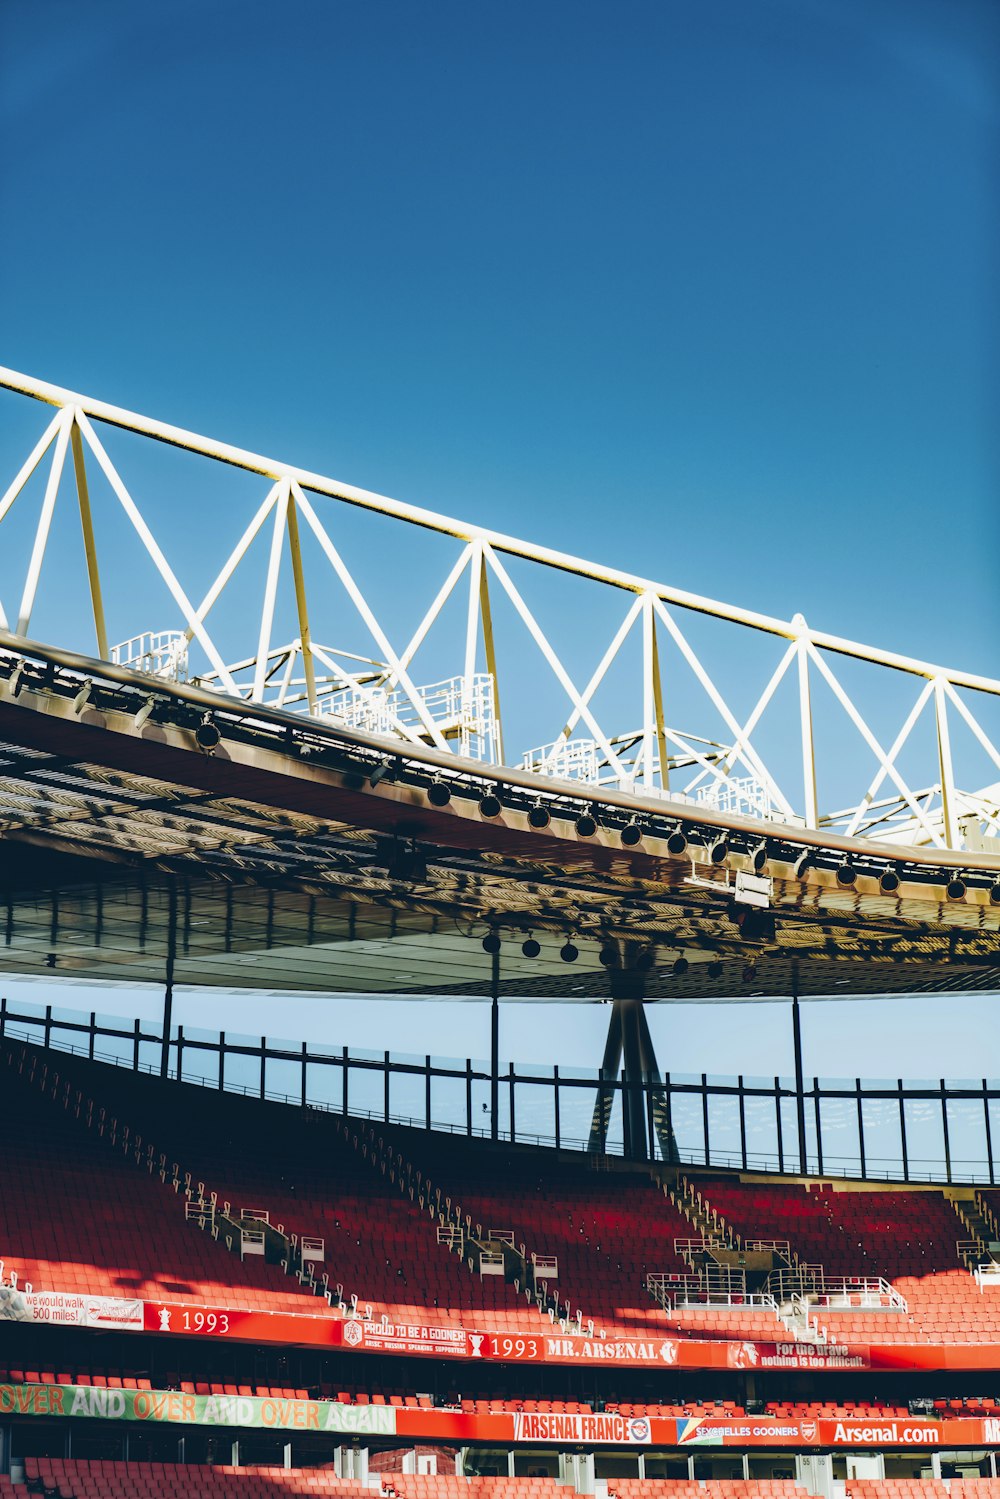 an empty stadium with red seats under a bridge